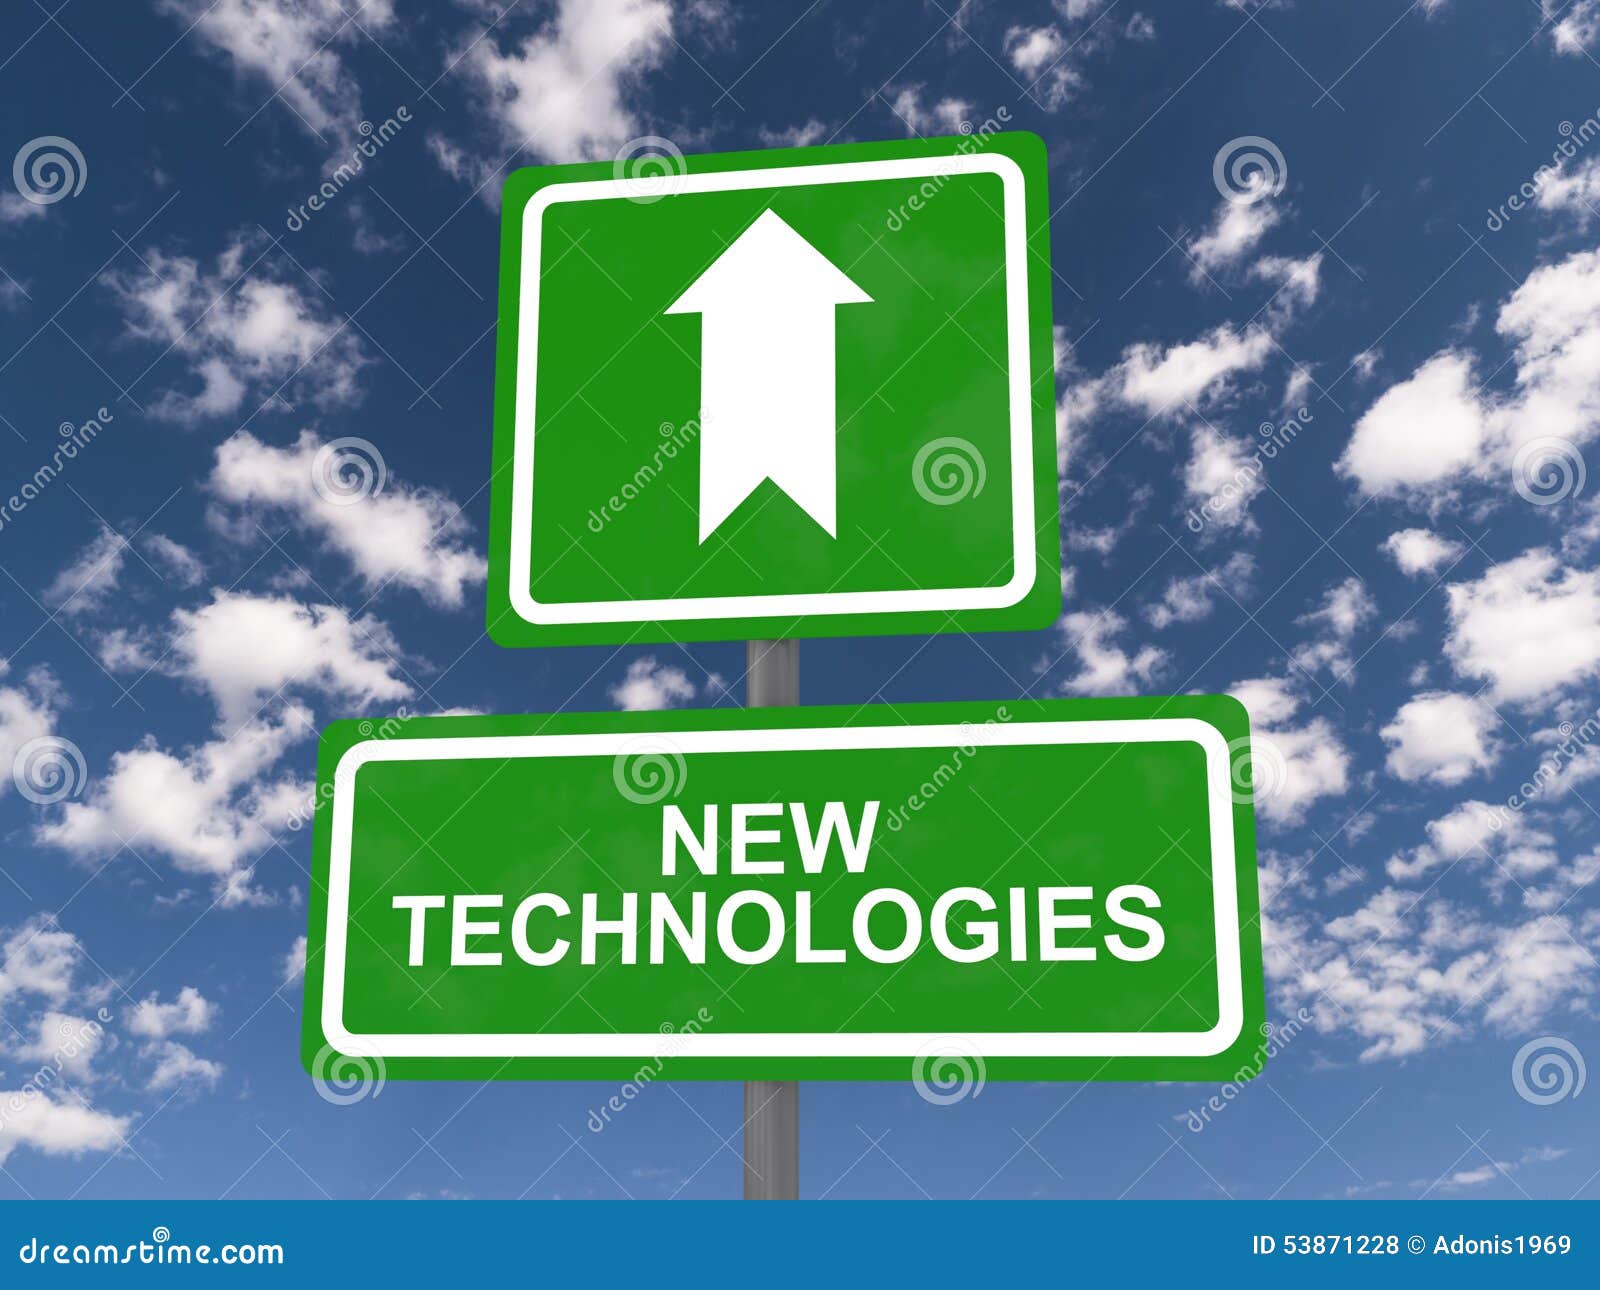 new technologies